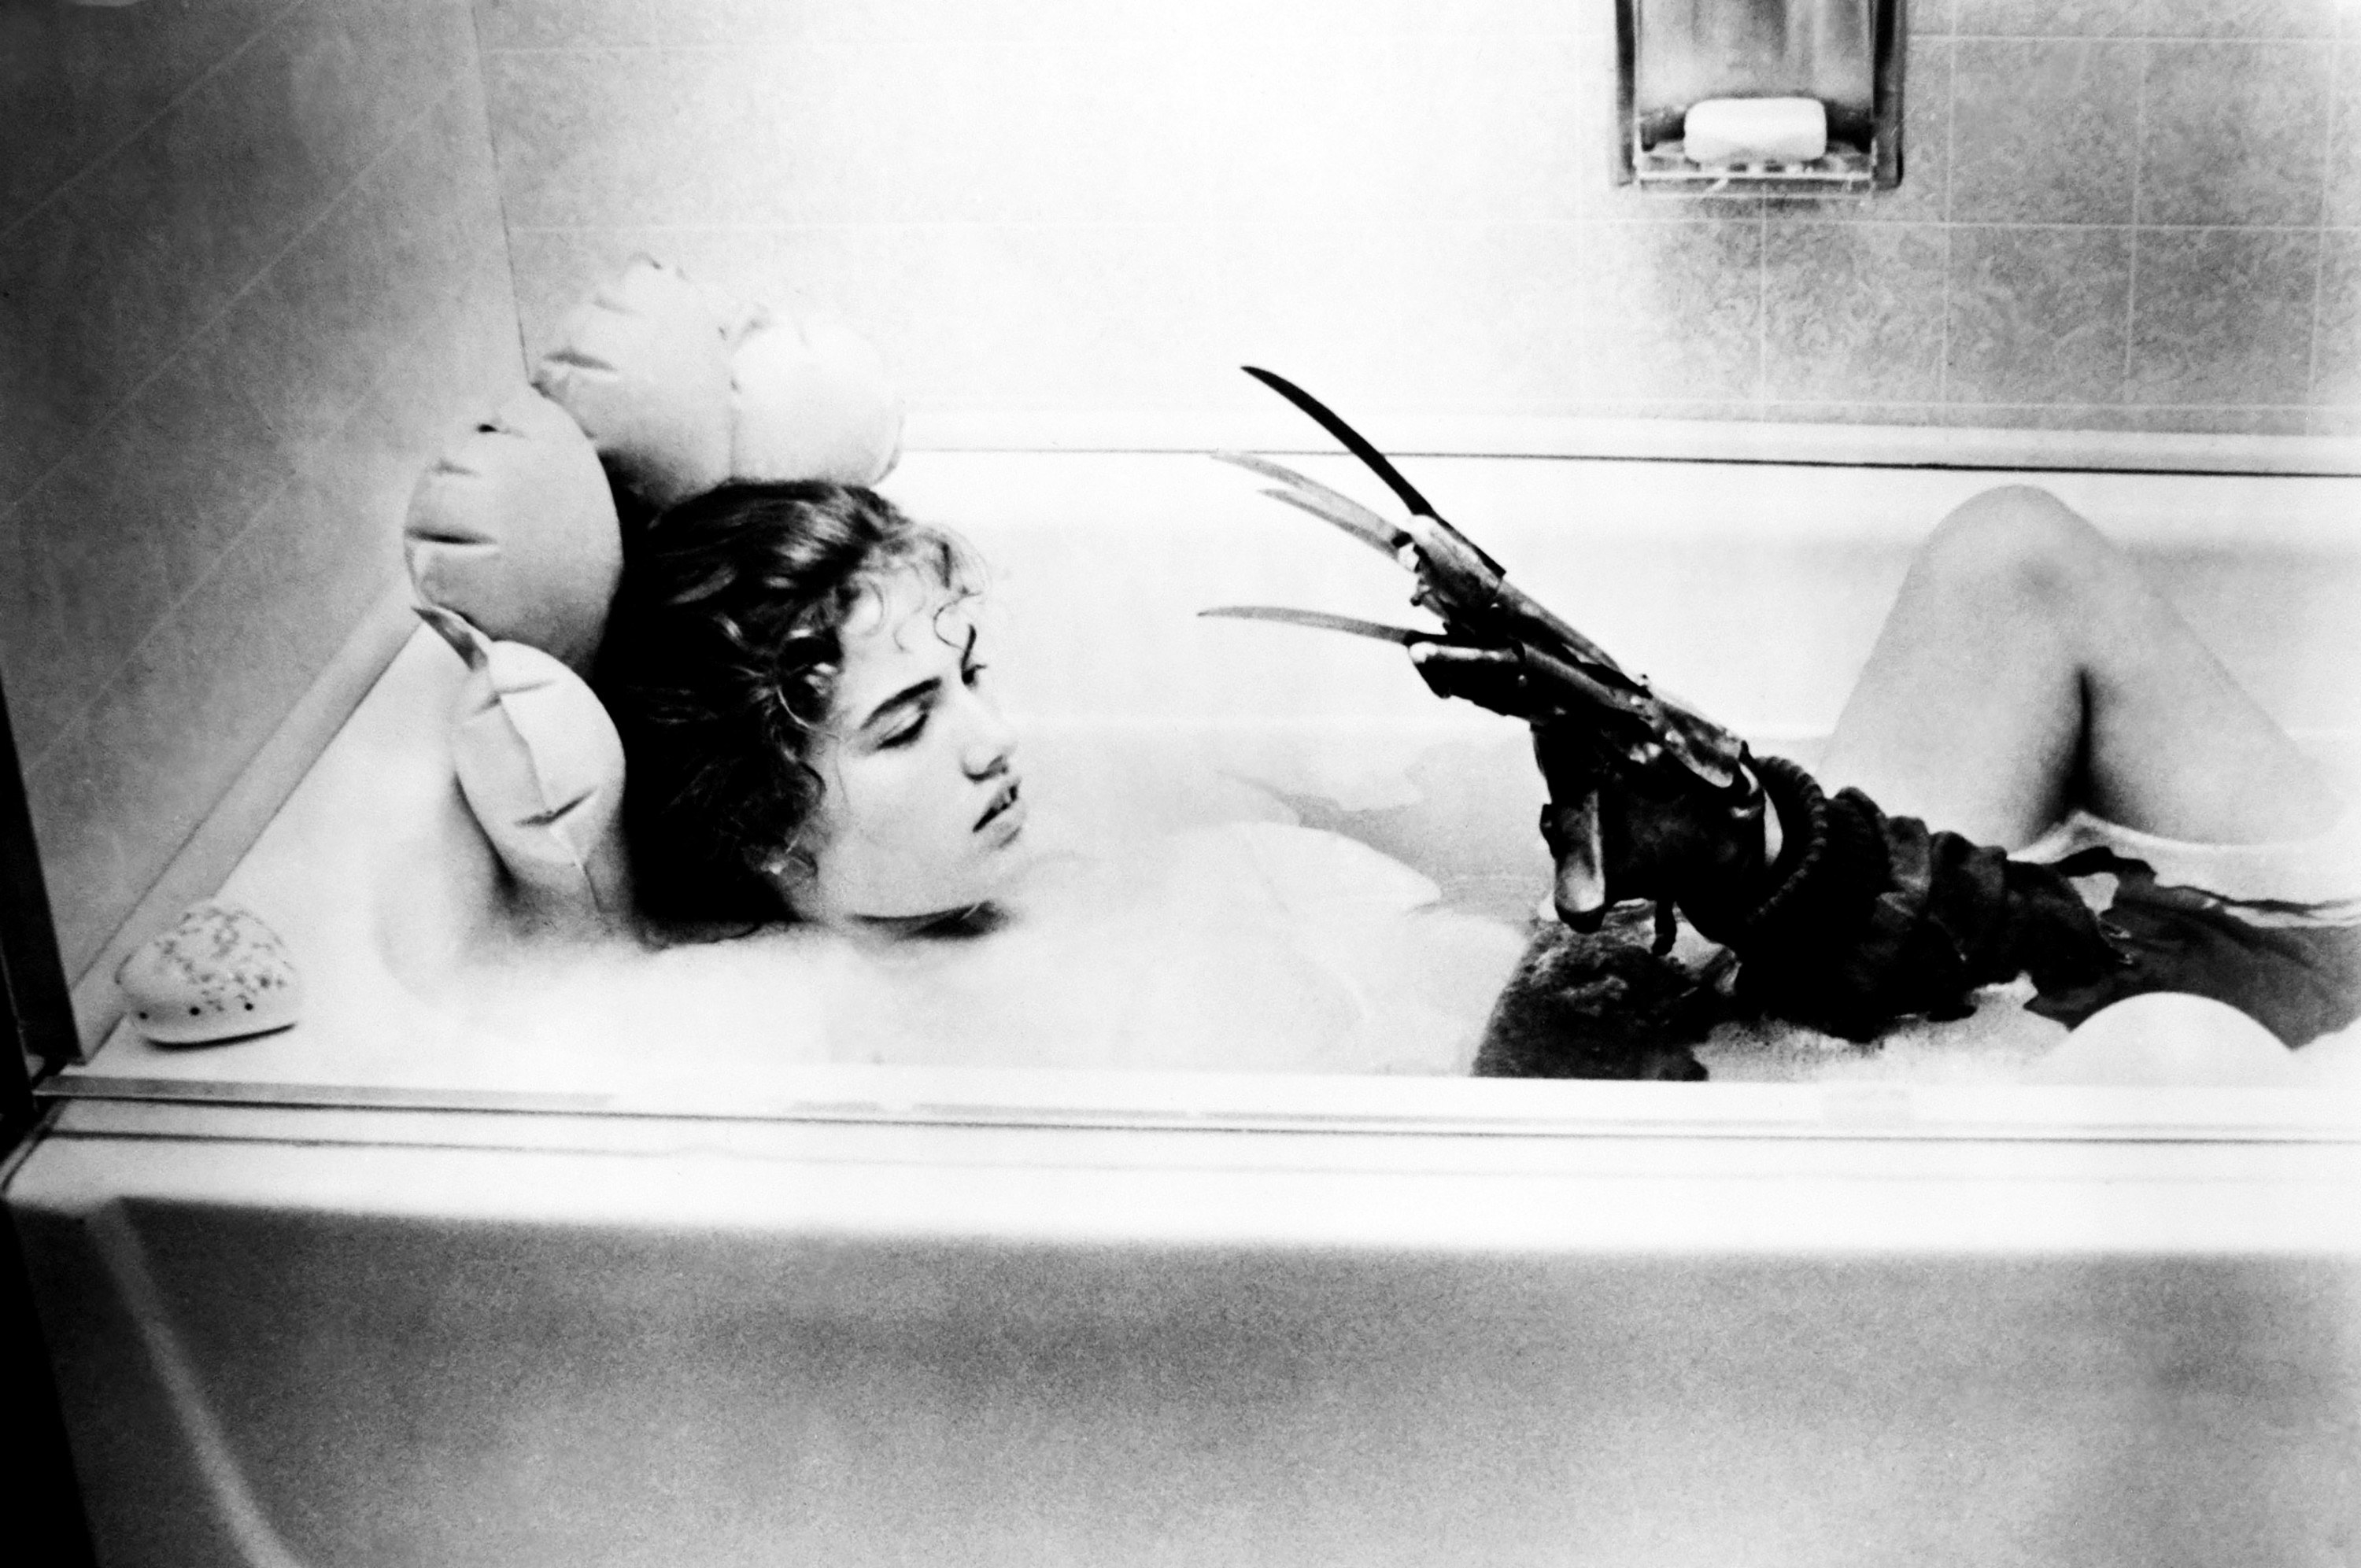 Freddy Krueger attempts to kill a girl who fell asleep in the bath